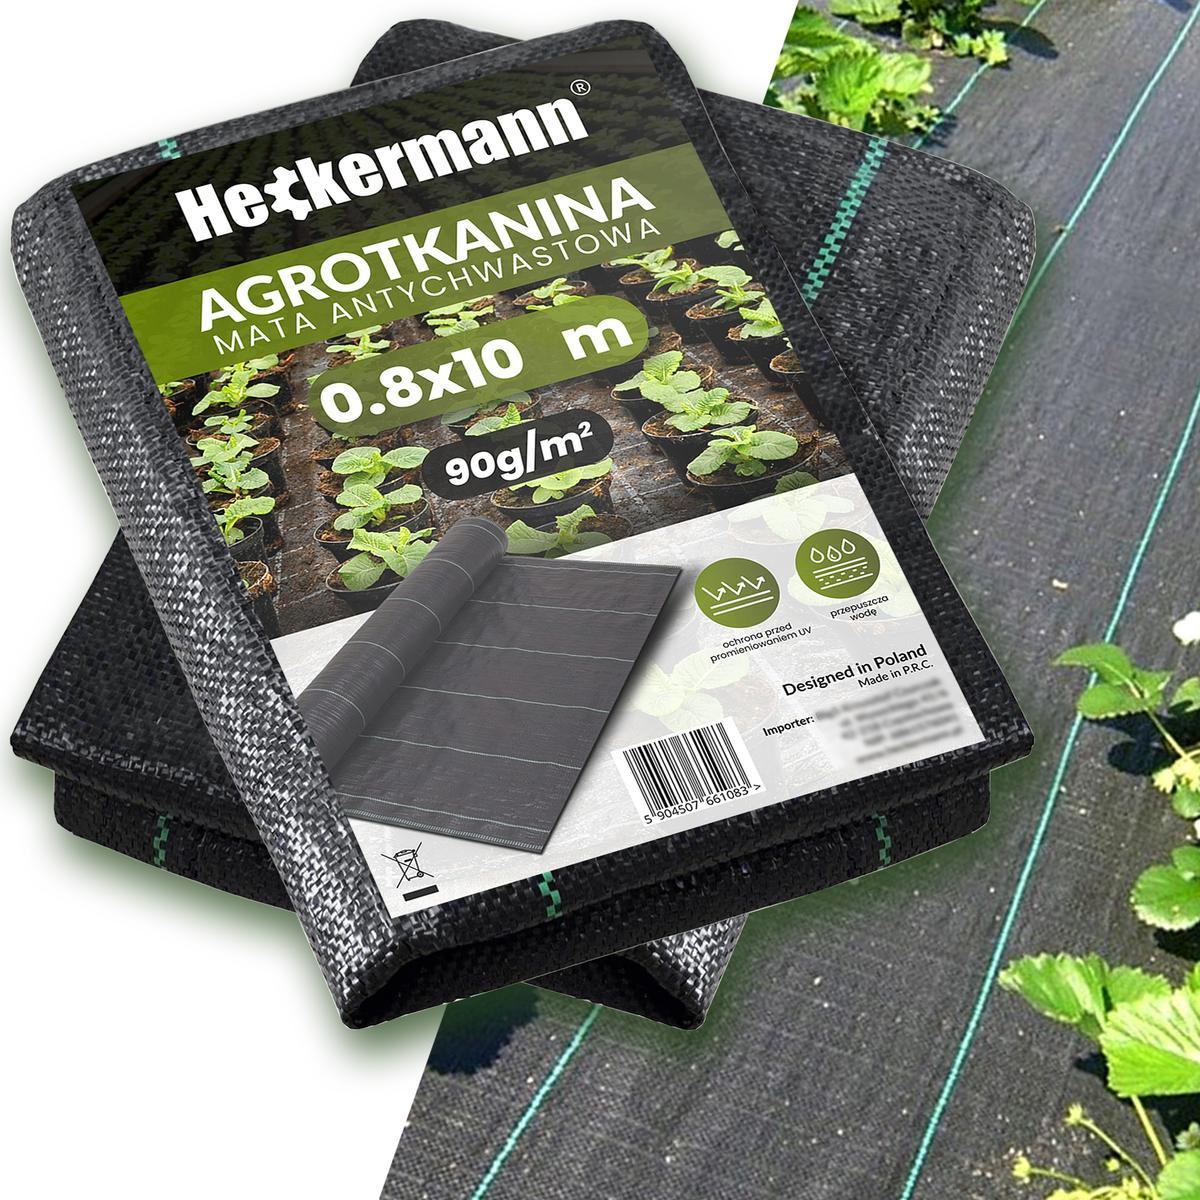 Agrotkanina Heckermann 0,8x10m 90g/m2 Czarna nr. 1